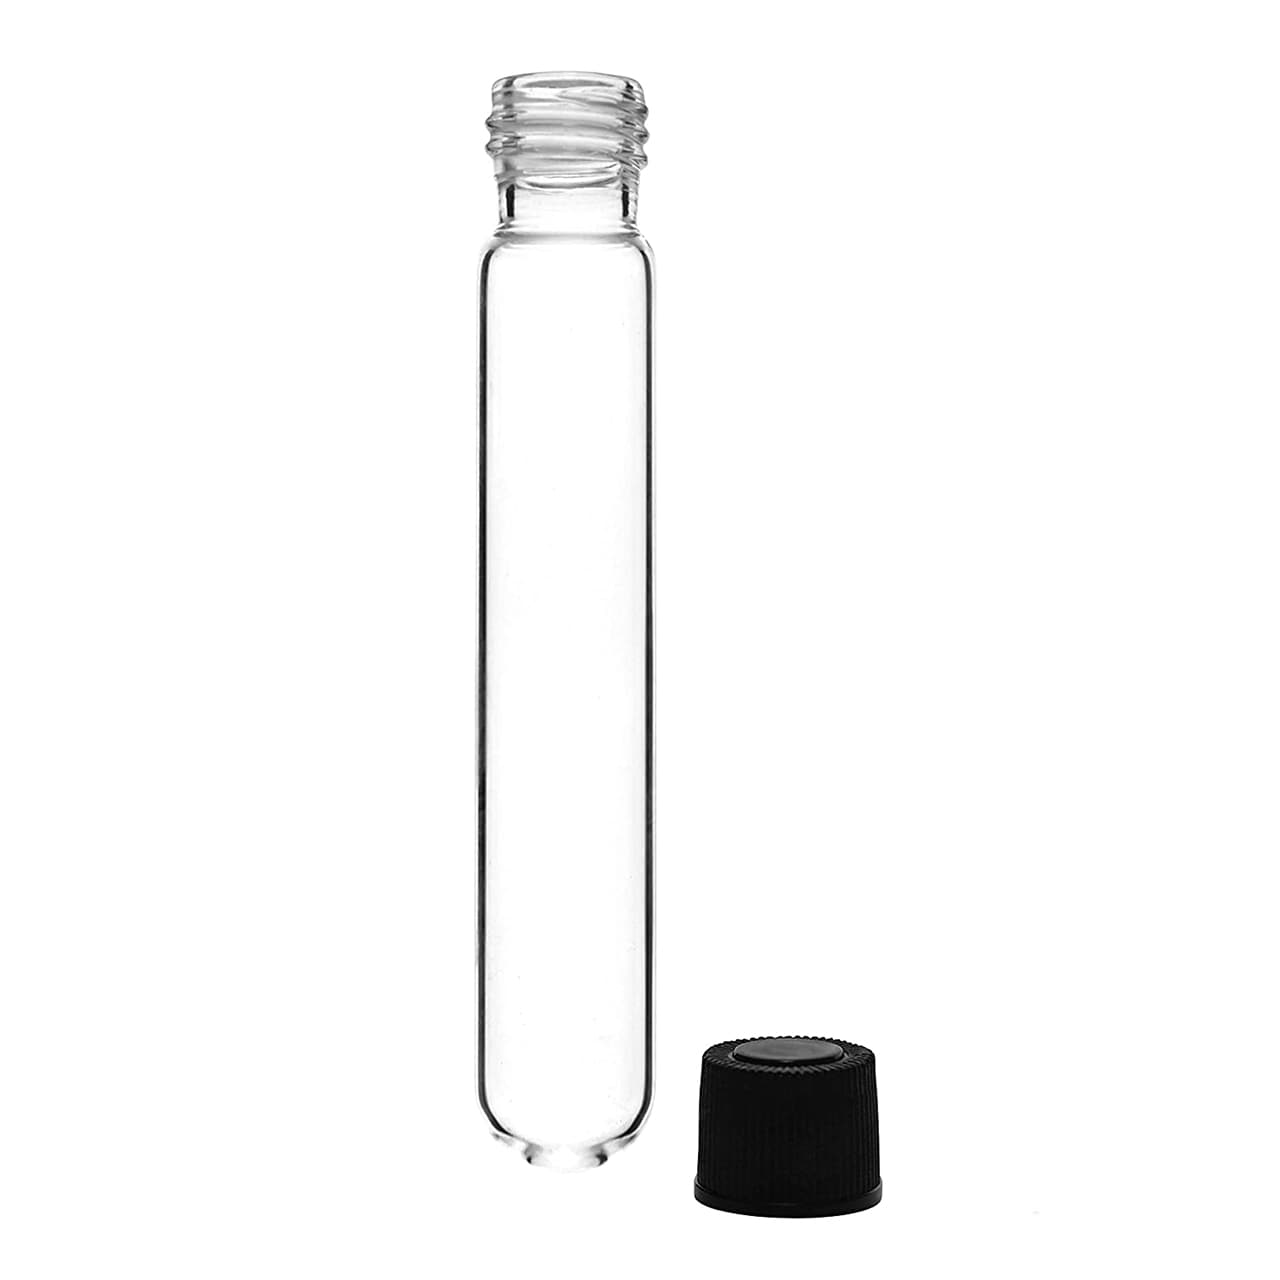 glass culture tube